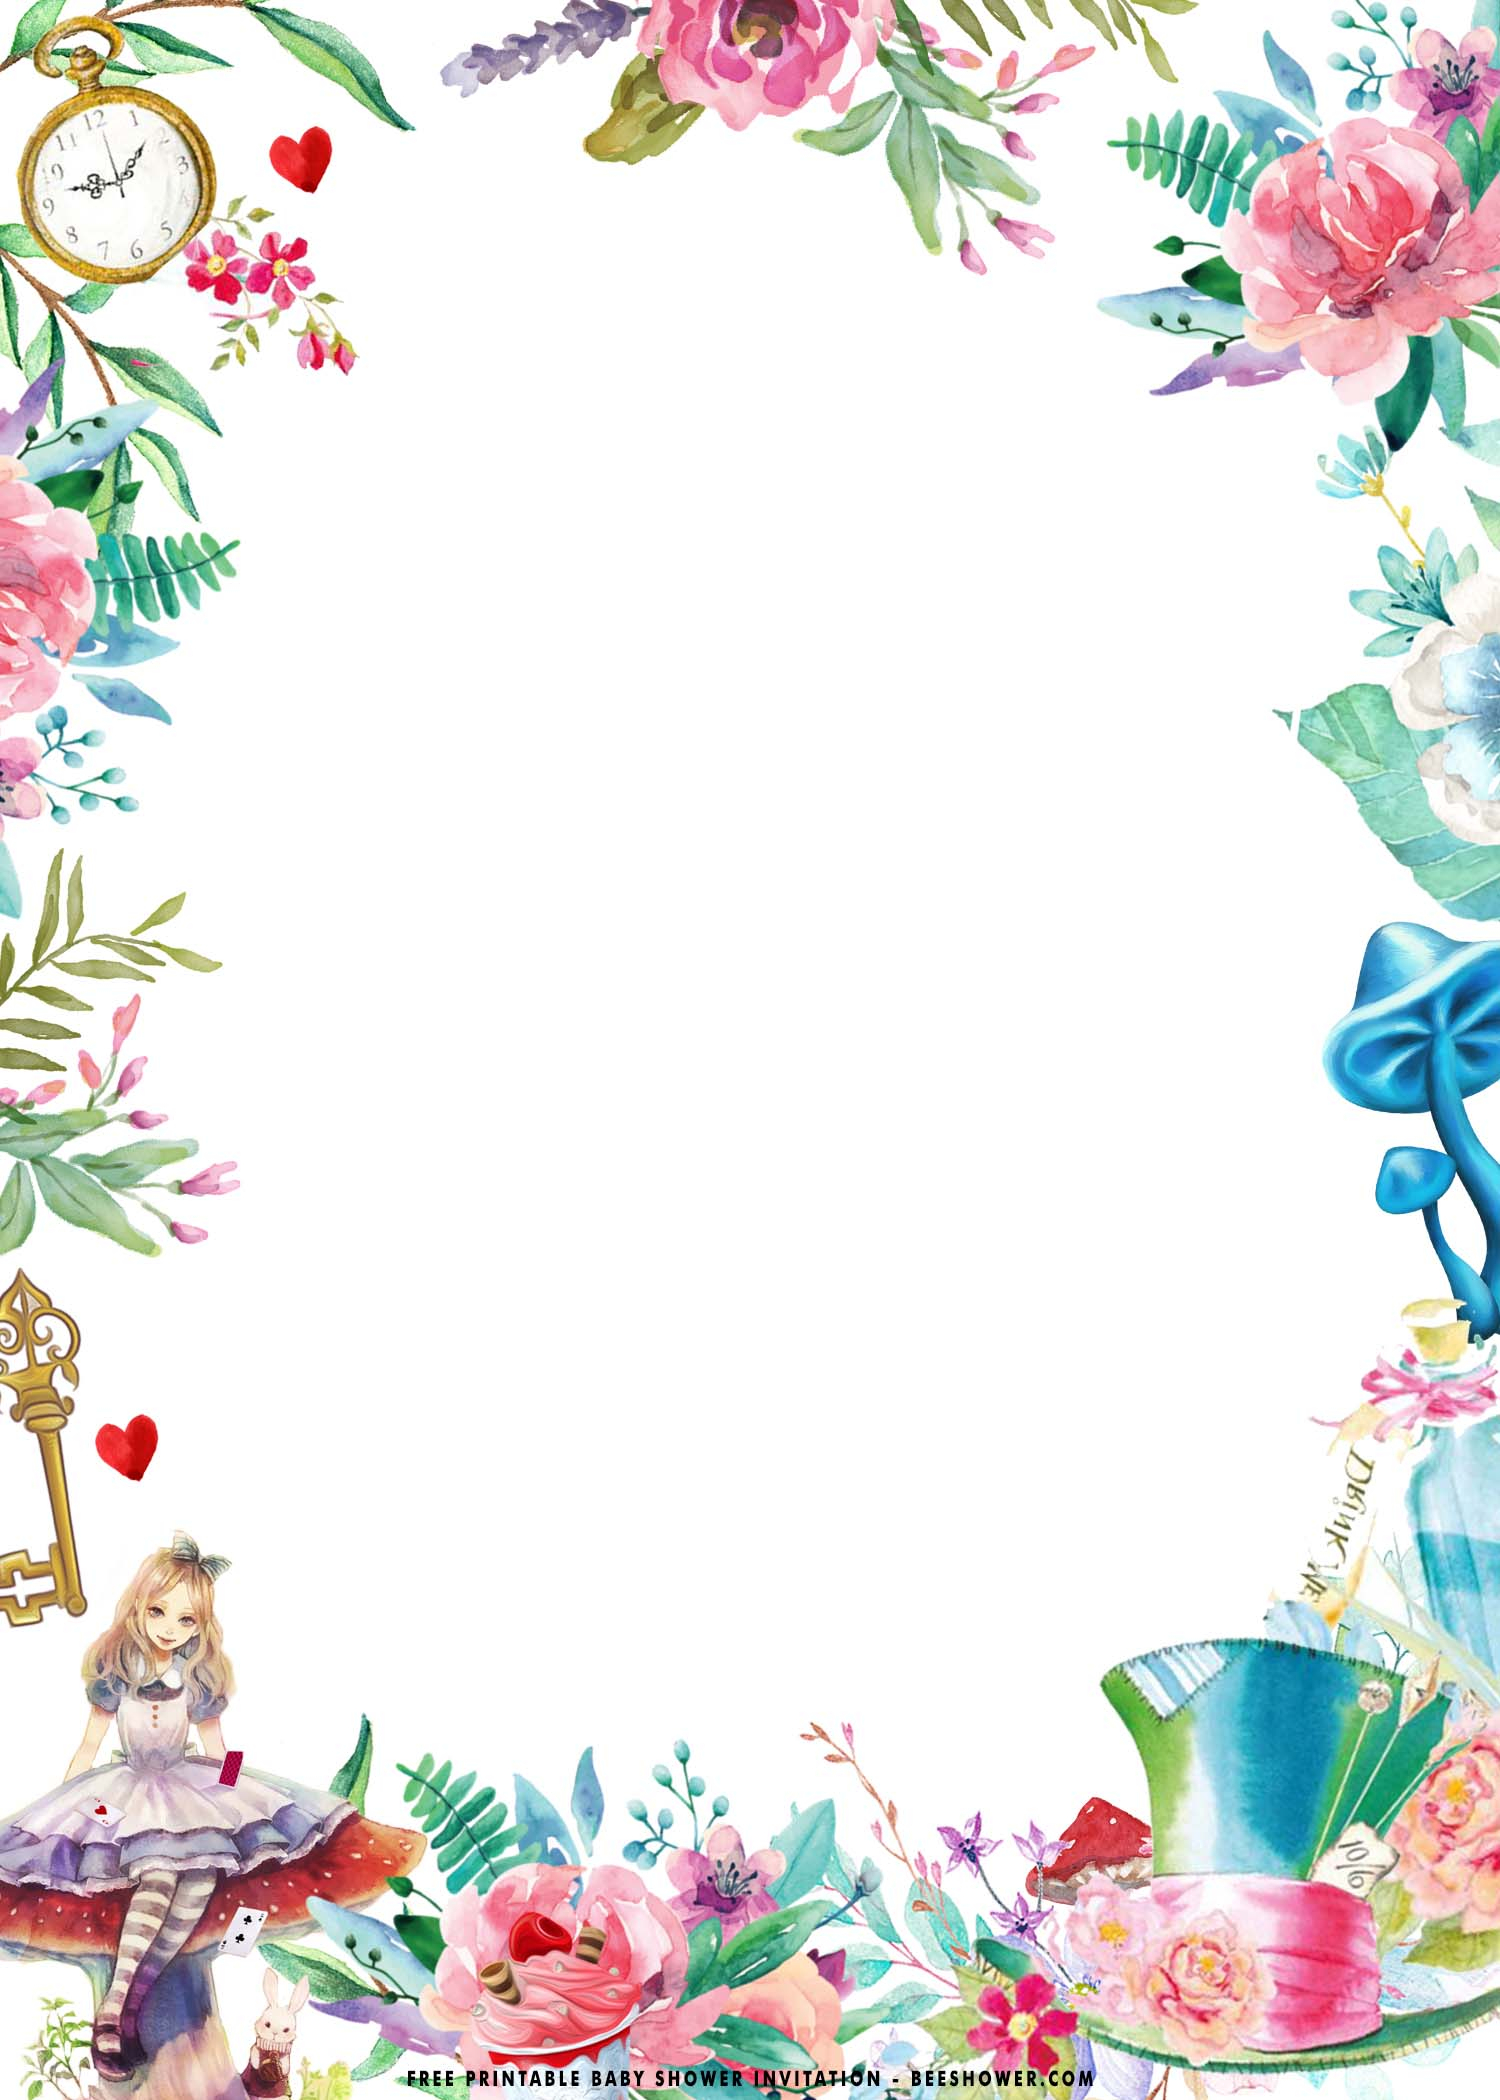 Alice In Wonderland Tea Party Invitation FREE Printable Baby Shower